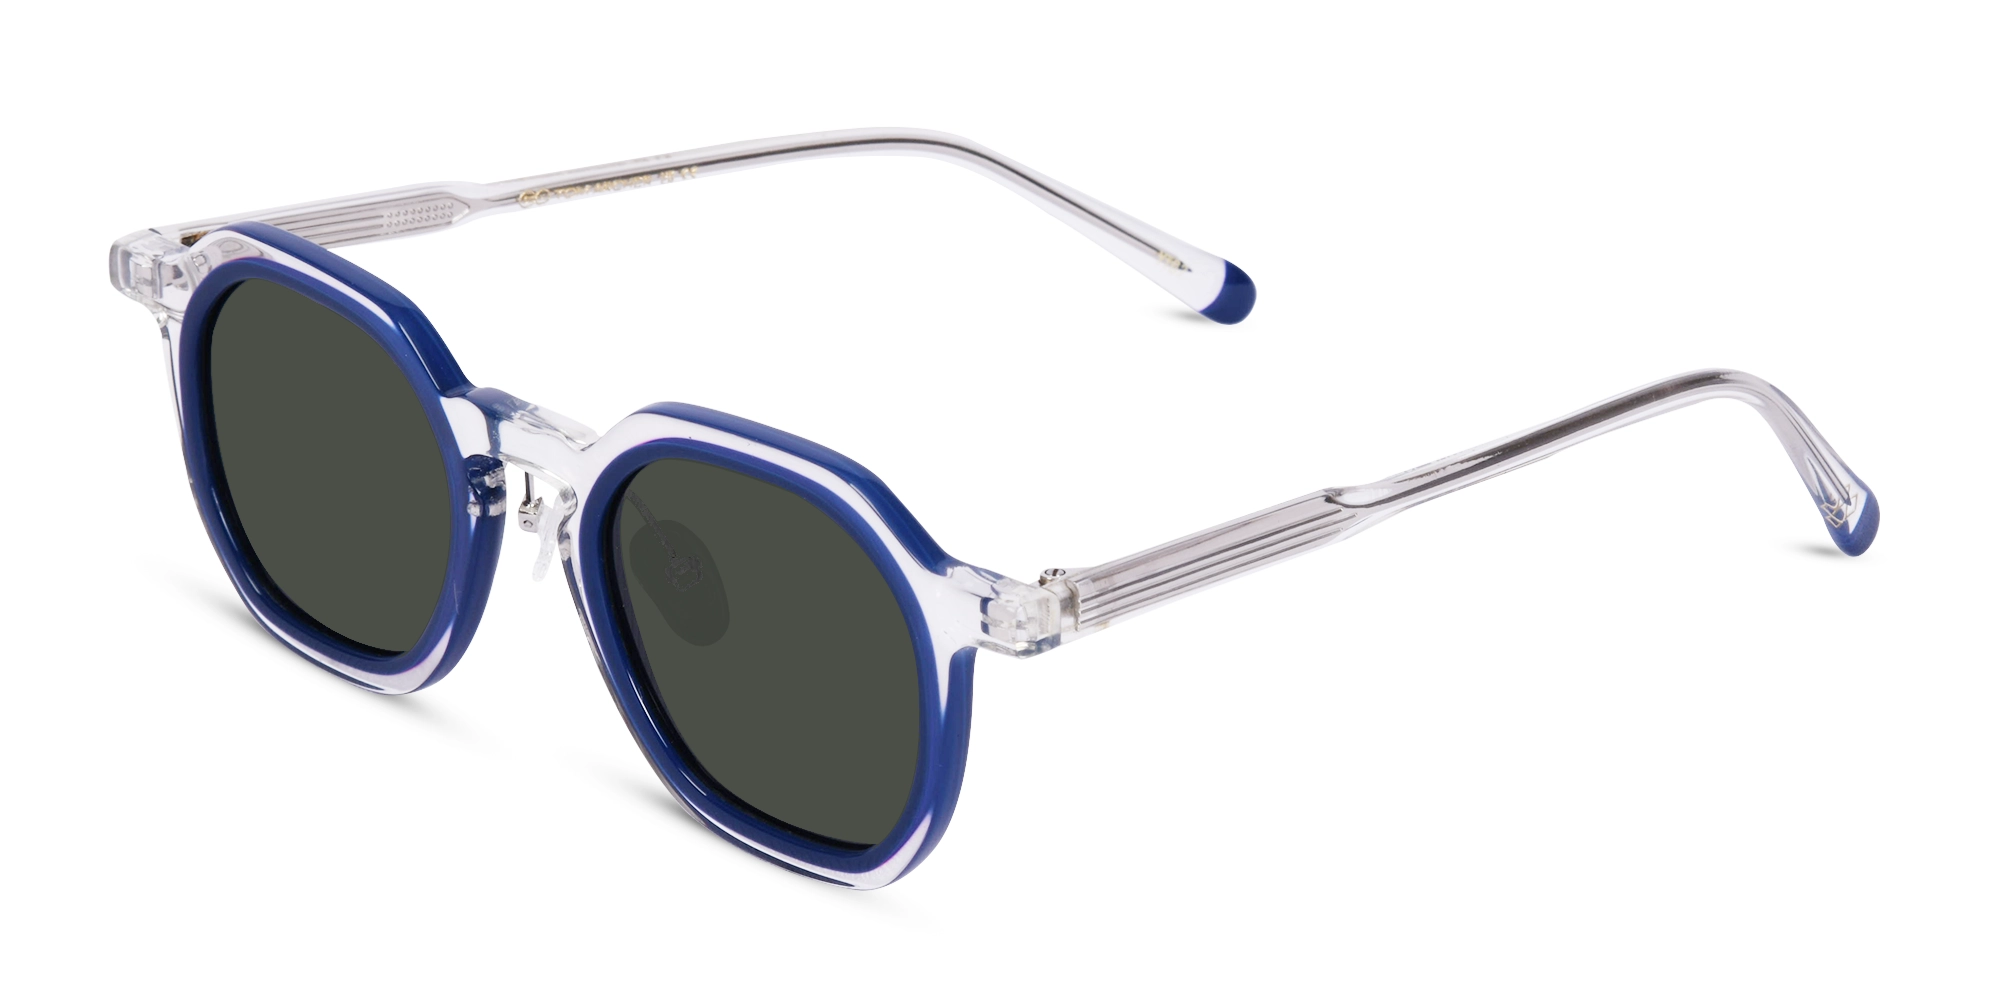 Transparent Blue Sunglasses